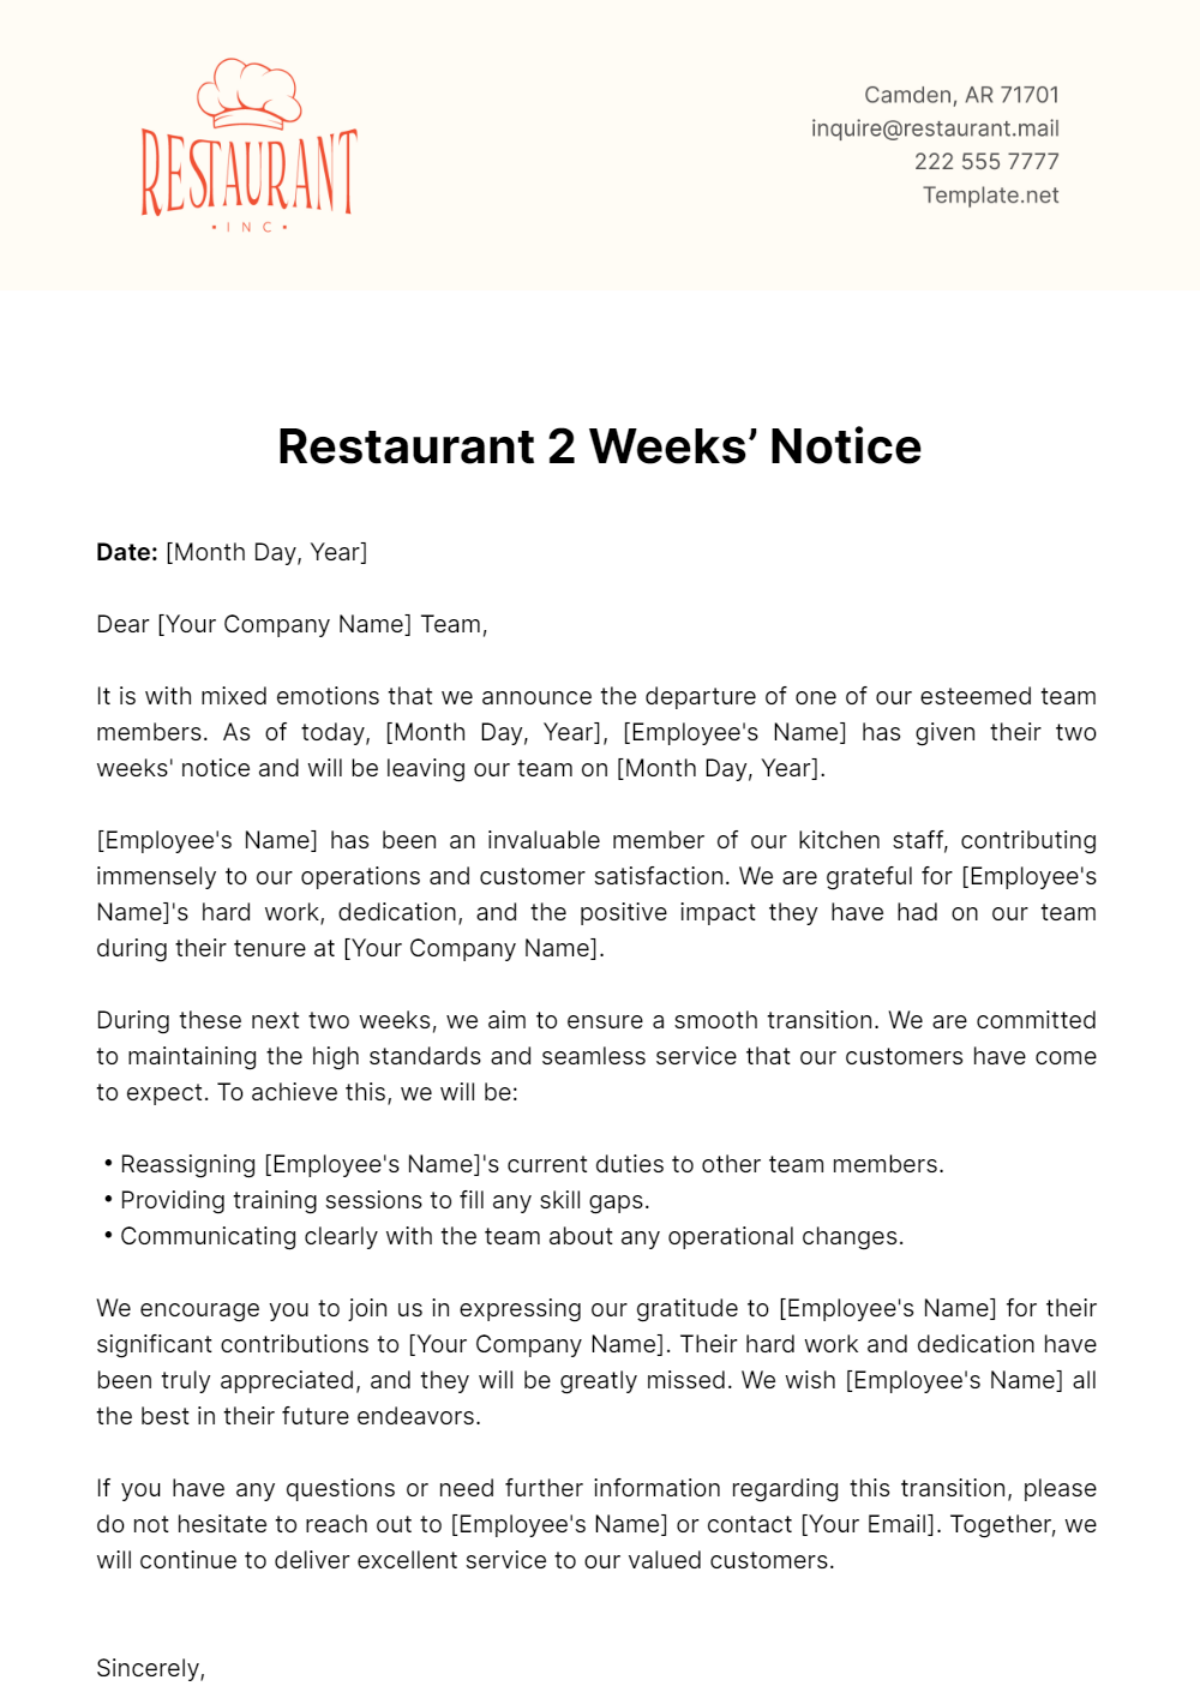 Free Restaurant 2 Weeks’ Notice Template